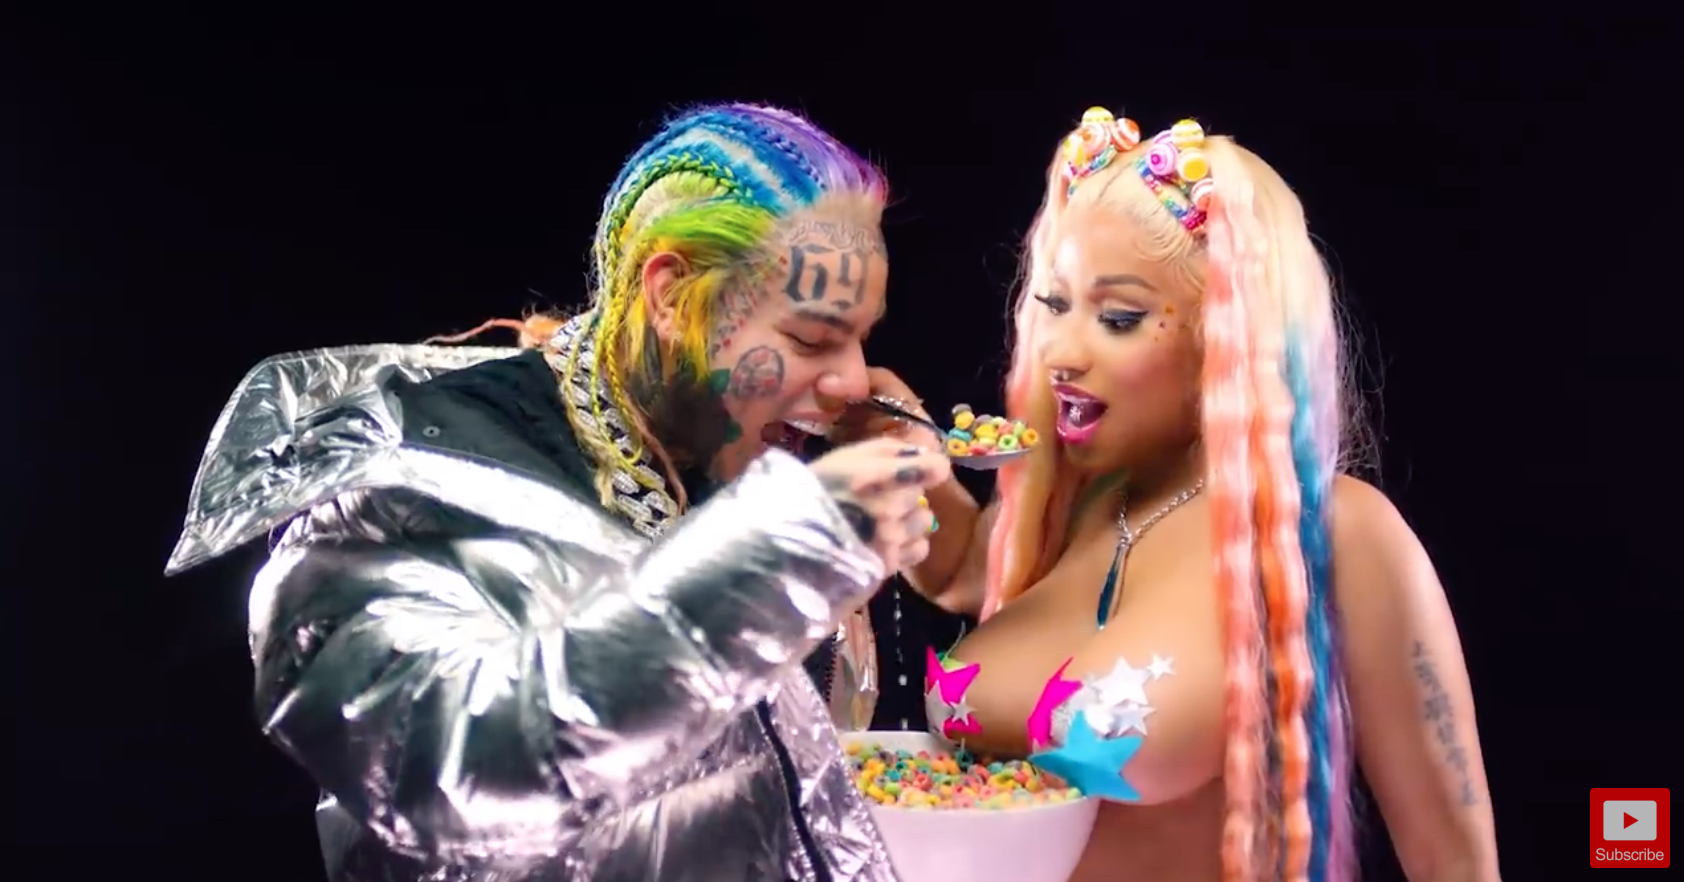 6ix9ine and Nicki Minaj’s ‘Trollz’ Debuts at No. 1